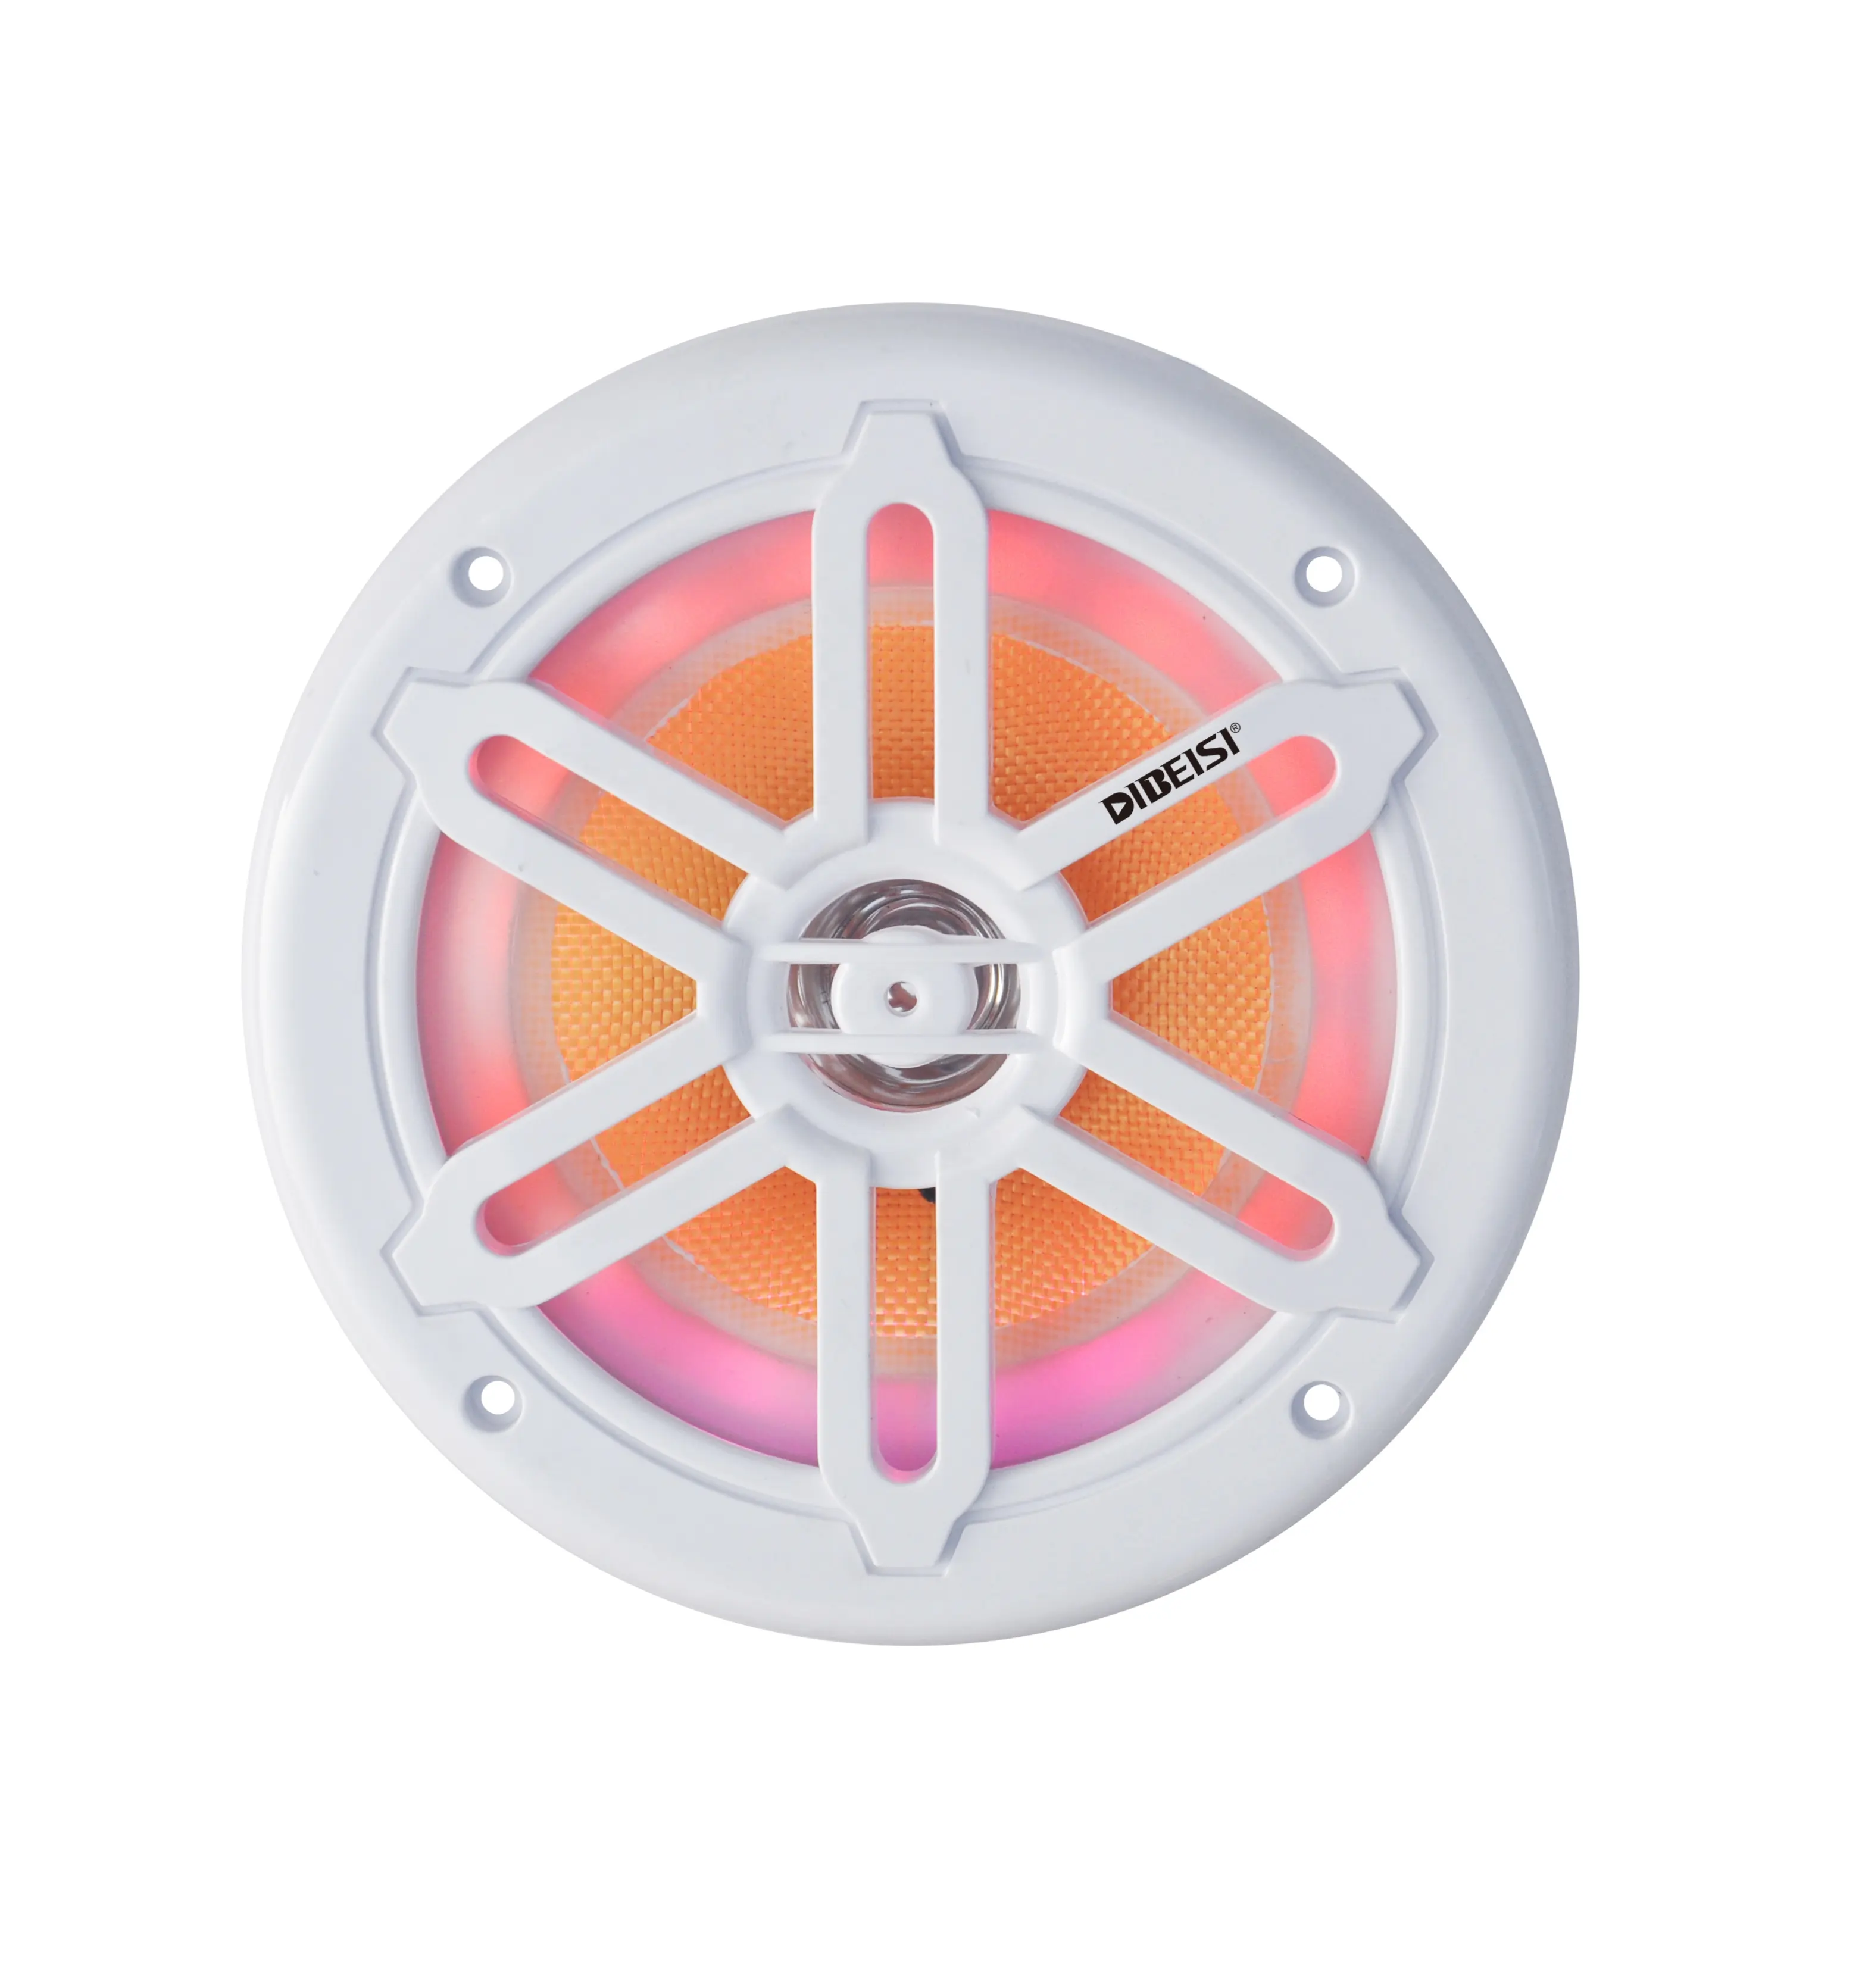 DIBEISI su geçirmez duş teknesi hoparlör, RGB ışık ile 2 yönlü deniz stereo hoparlör-DBS5032-RGB